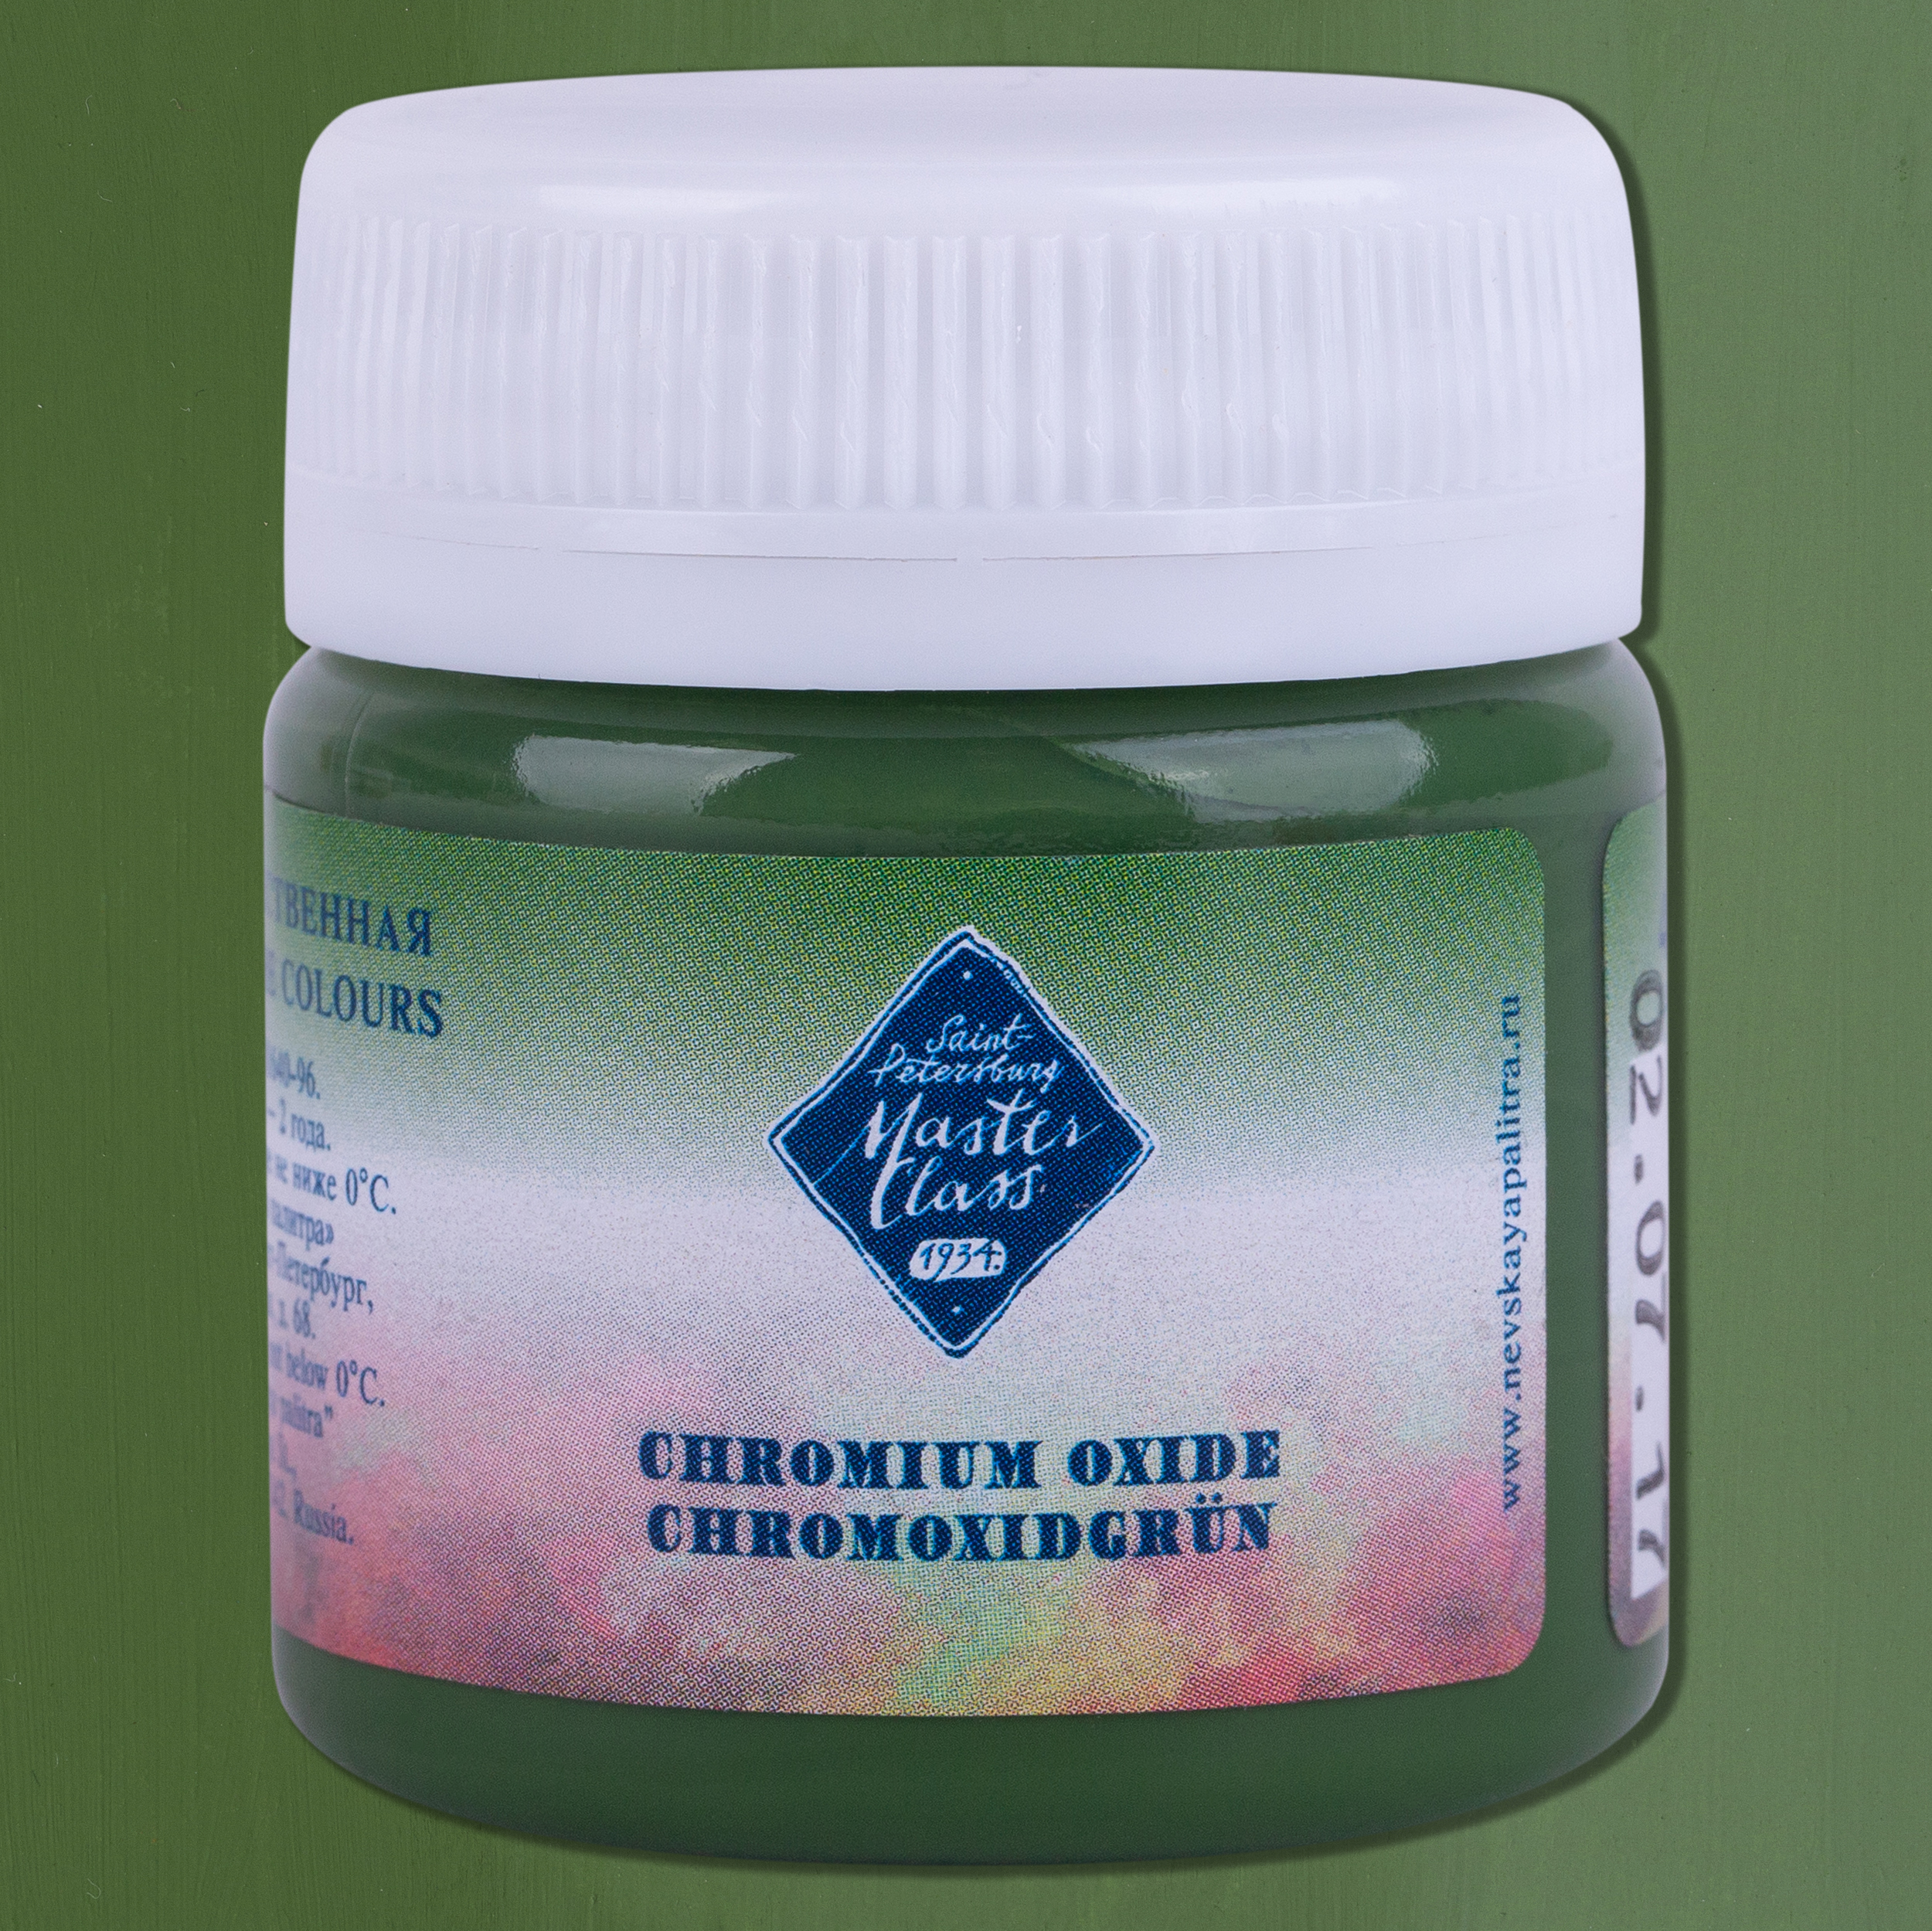 Chromium oxide "Master Class" in the jar. № 704